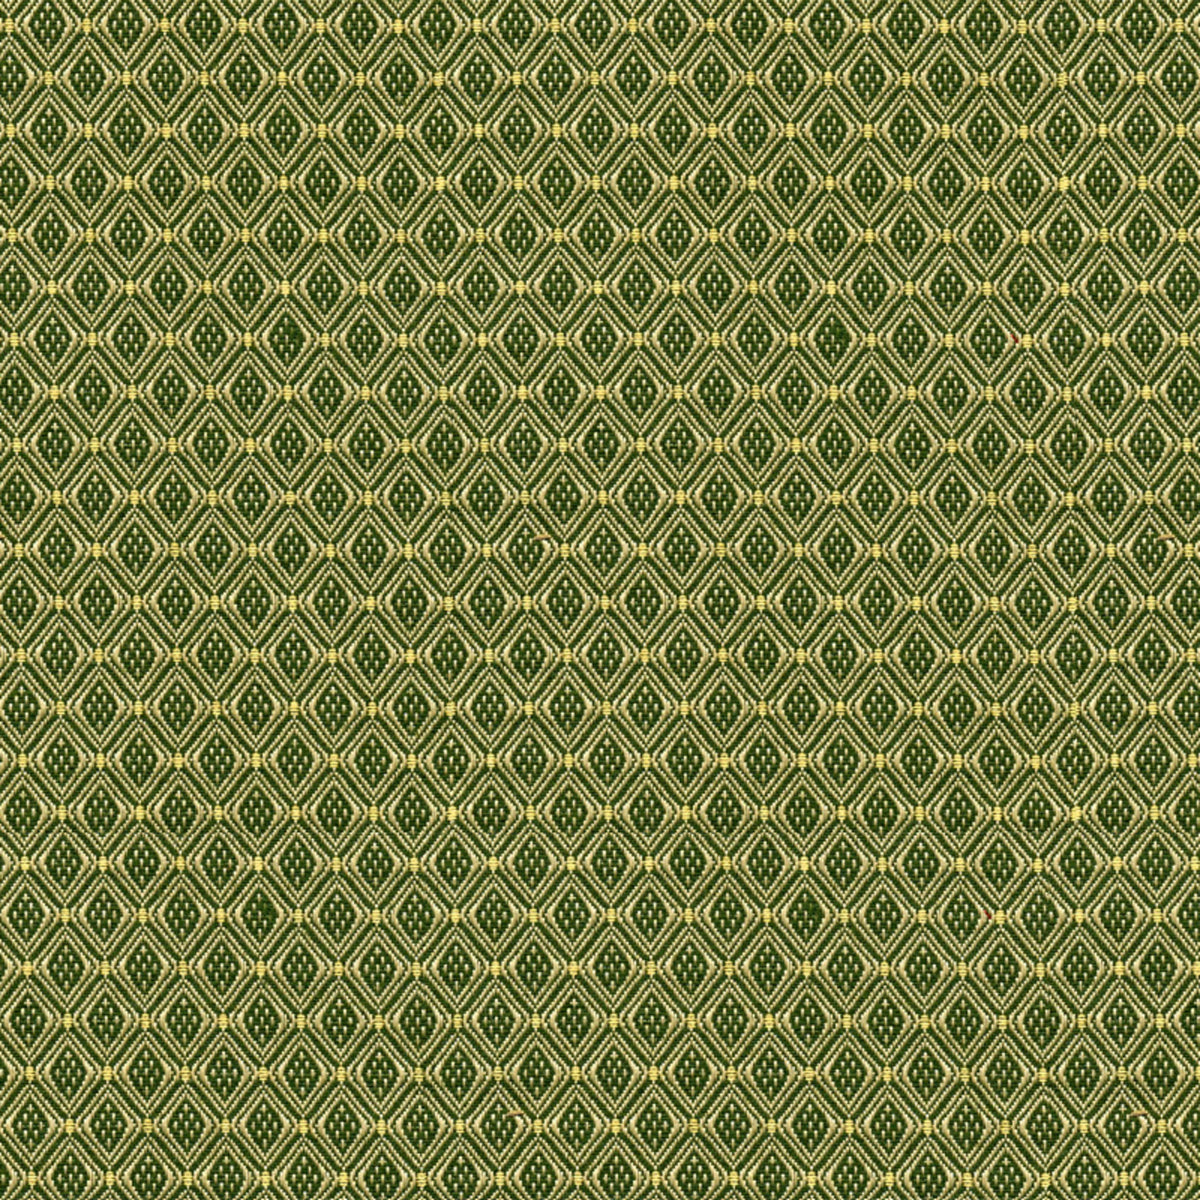 Canterbury Olive Fabric |#| 